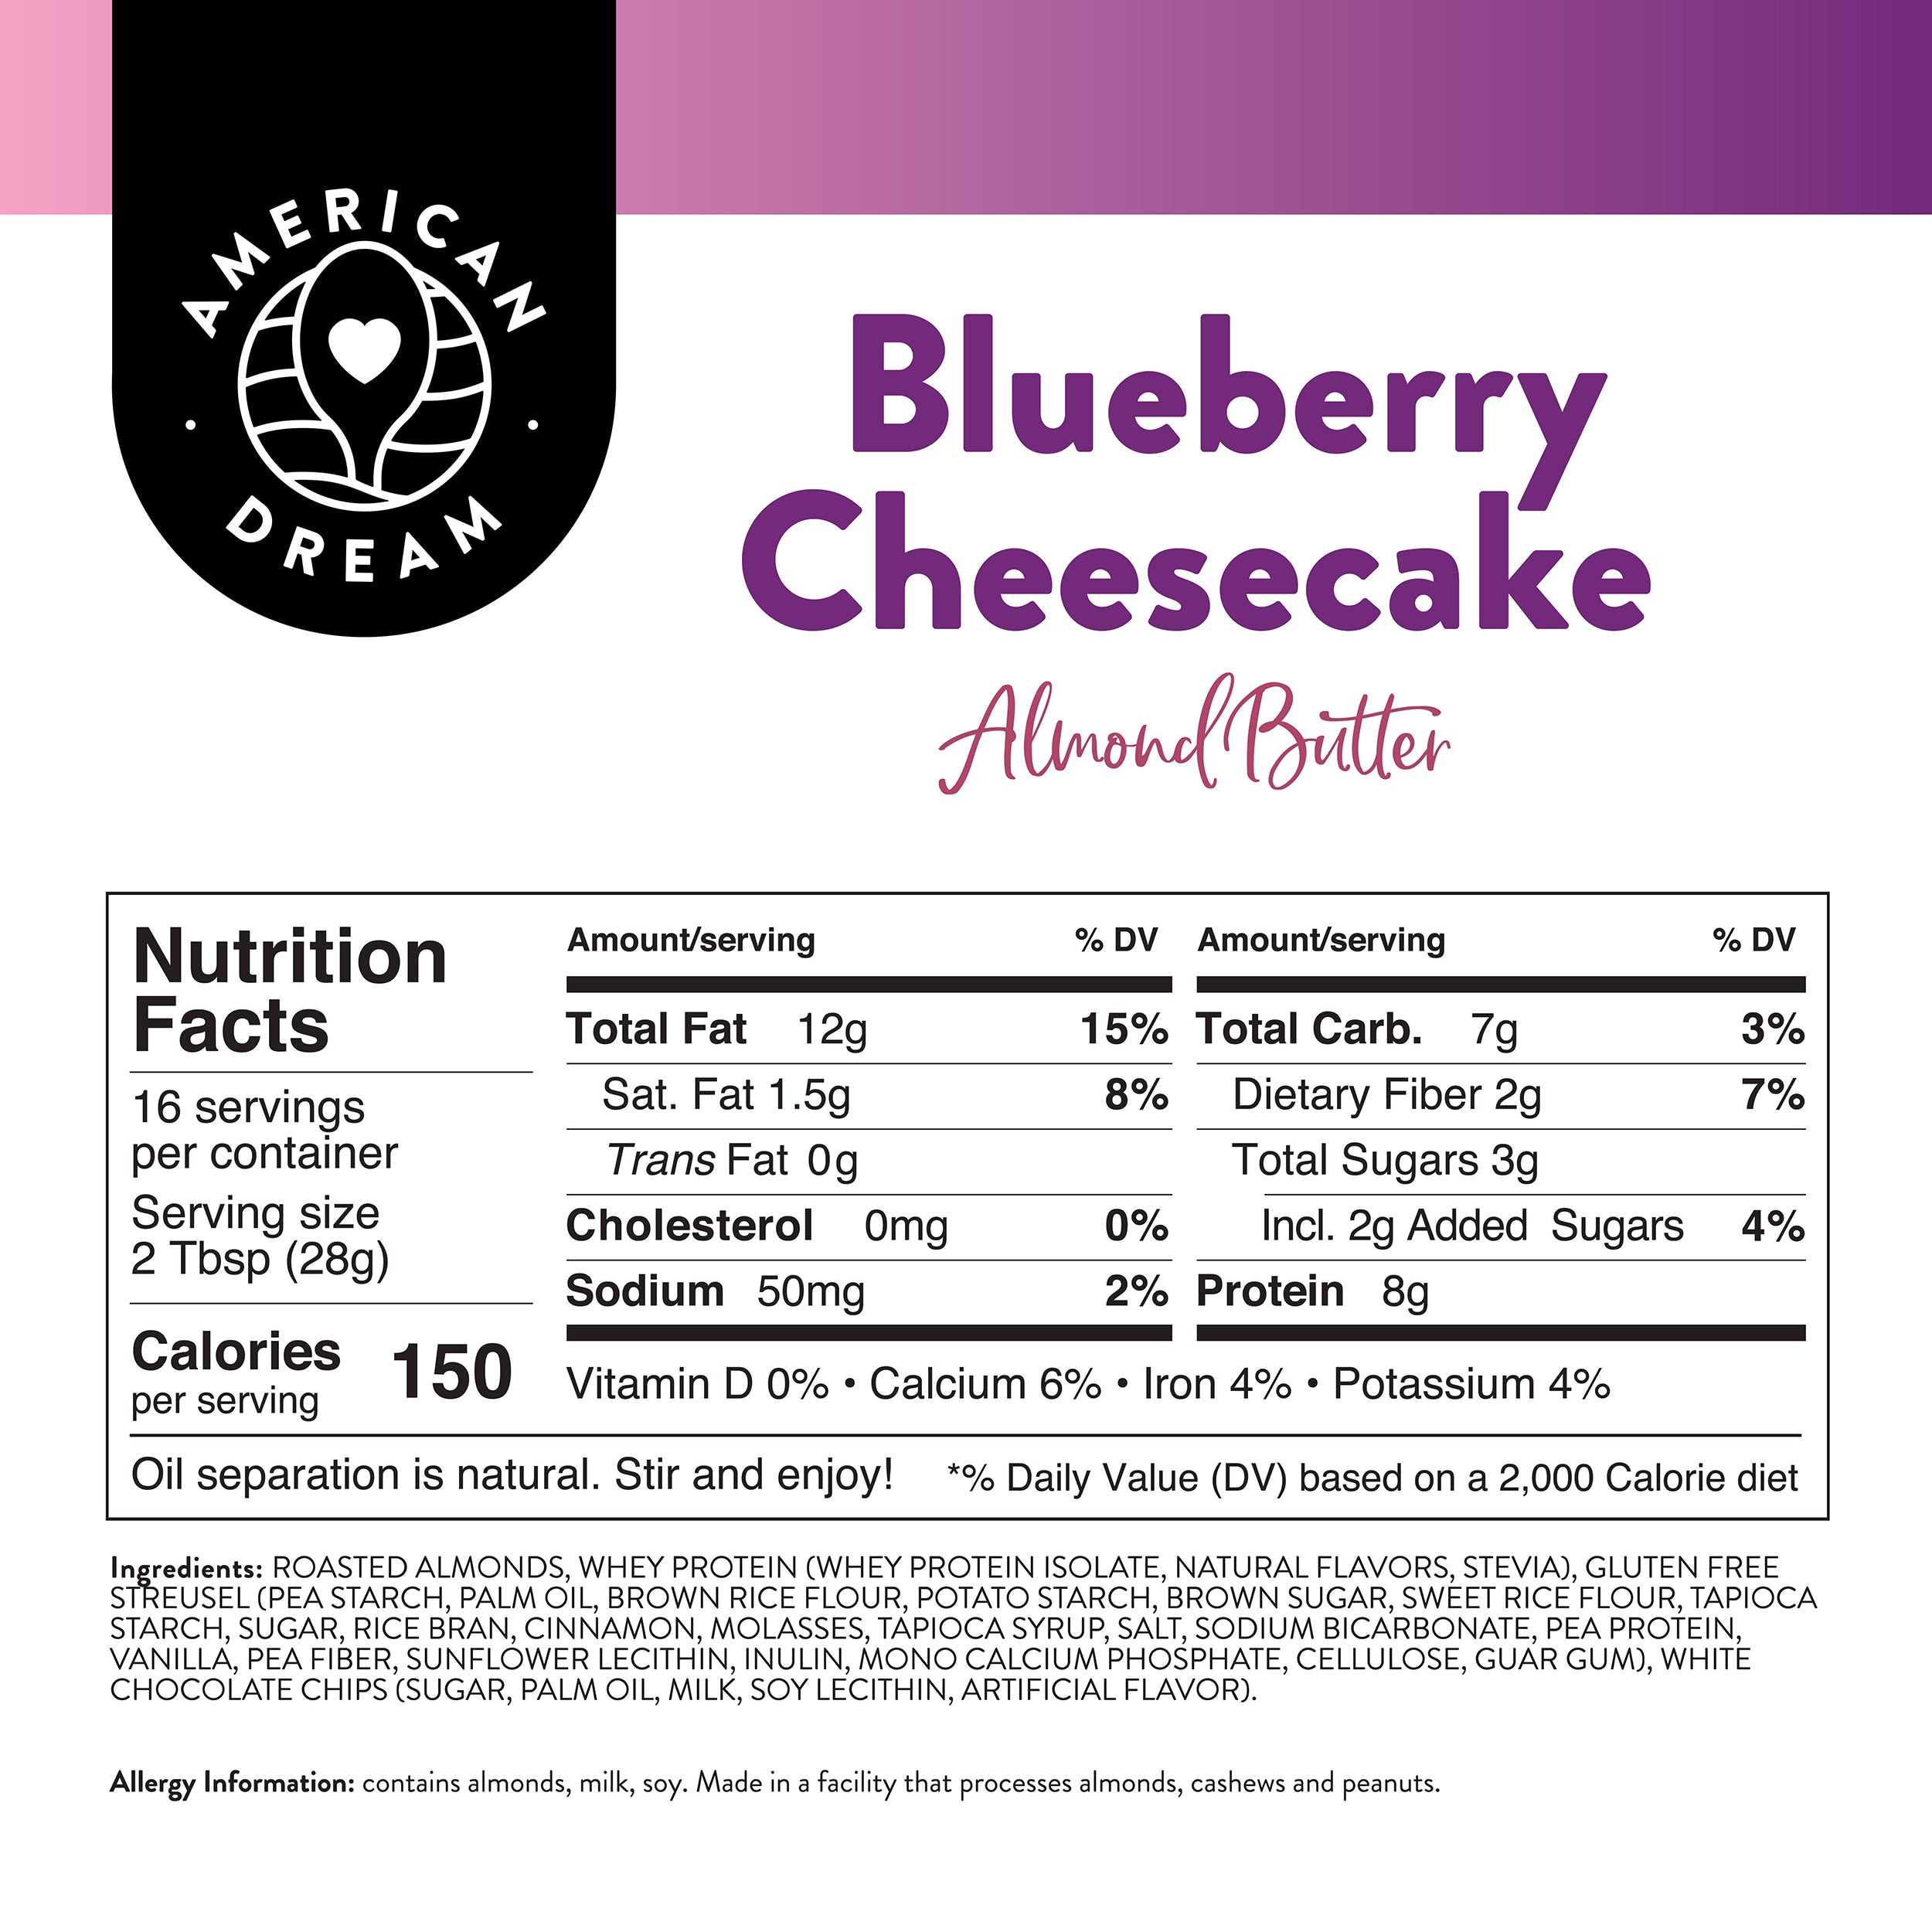 Gluten-Free Blueberry Cheesecake Almond Butter